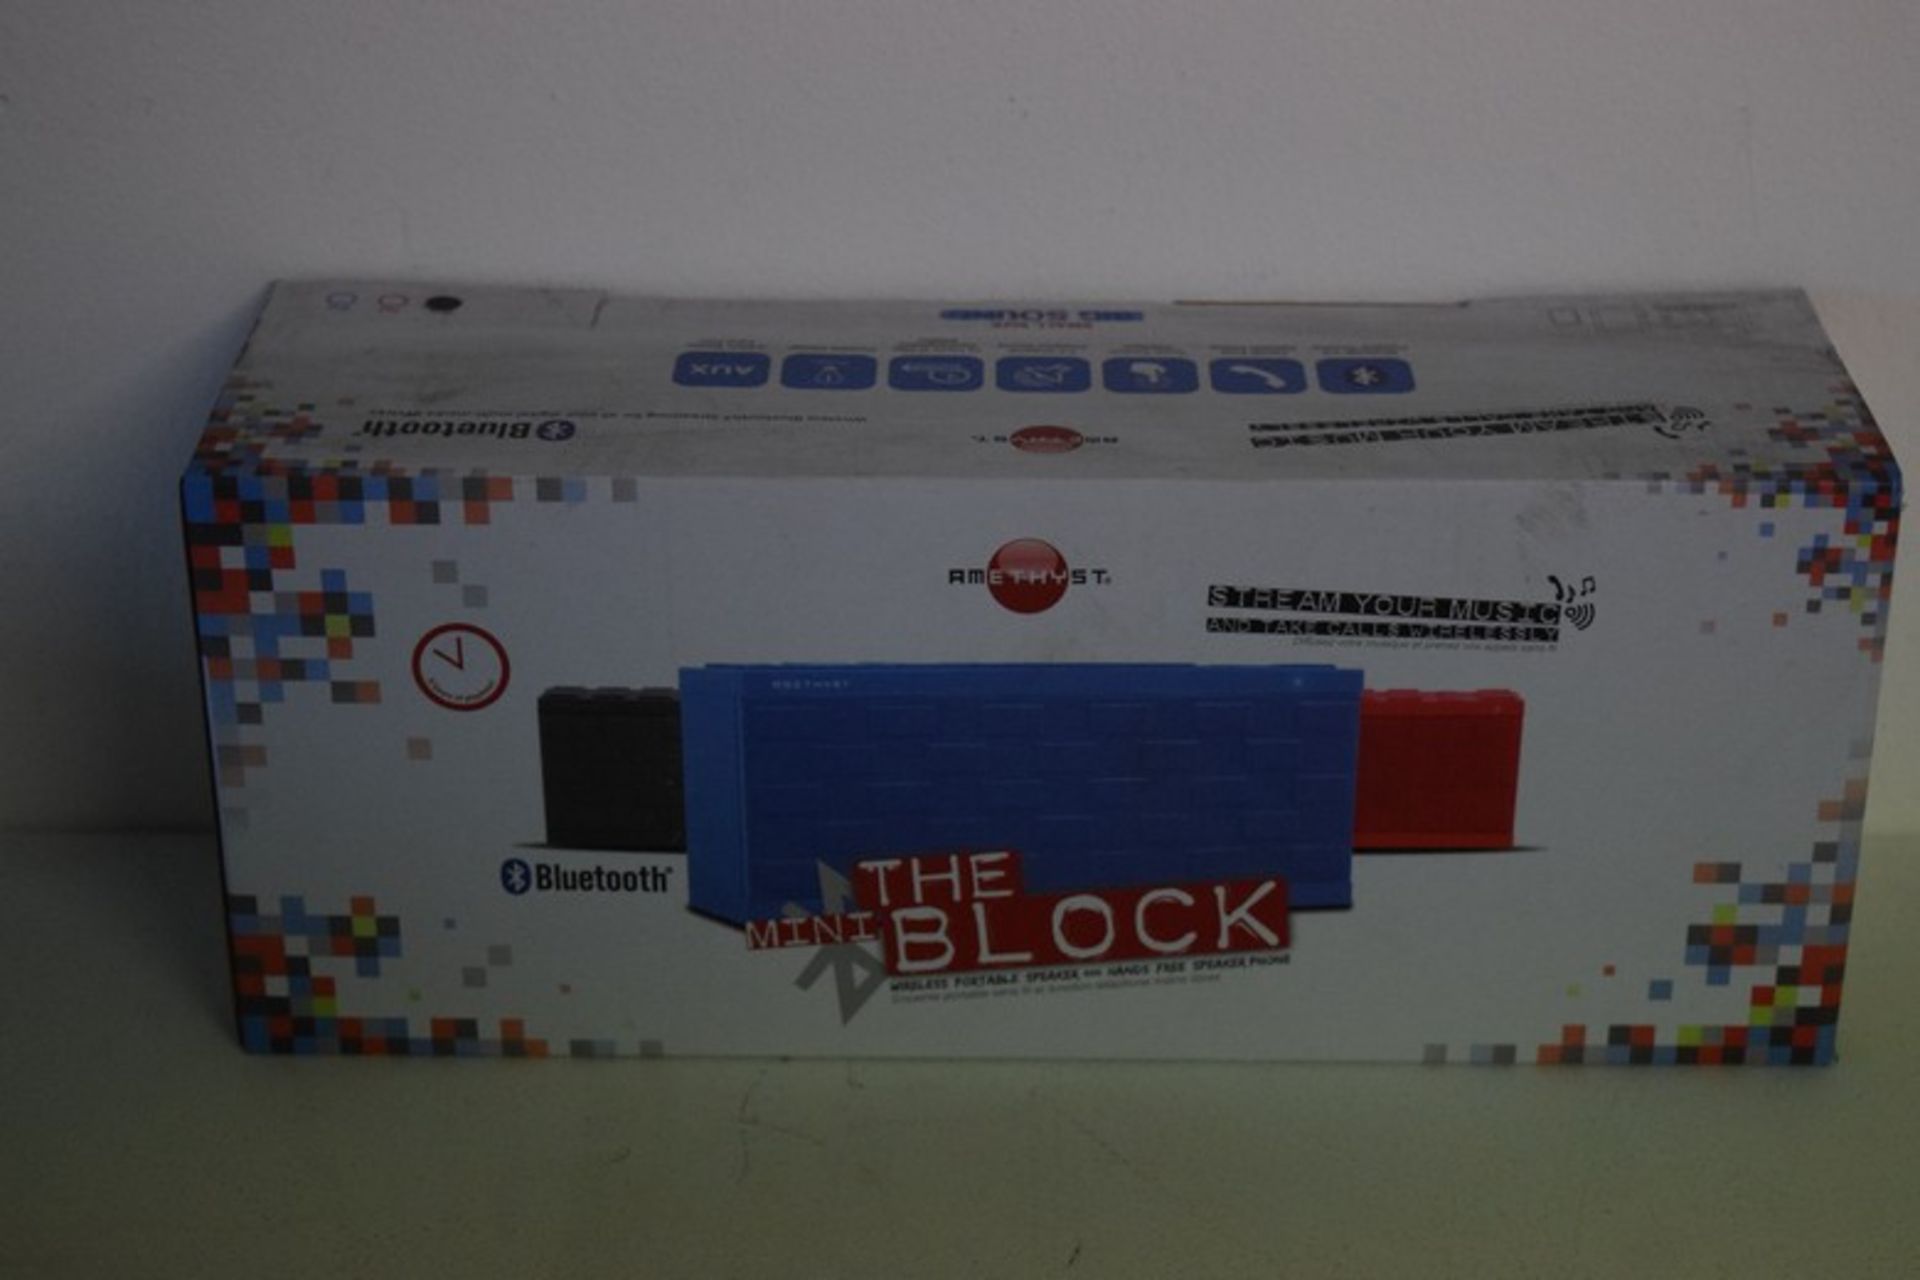 1 x BOXED BRAND NEW AMETHYST MINI BLOCK BLUETOOTH PORTABLE SPEAKER RRP £50 (23.11.2016) *PLEASE NOTE